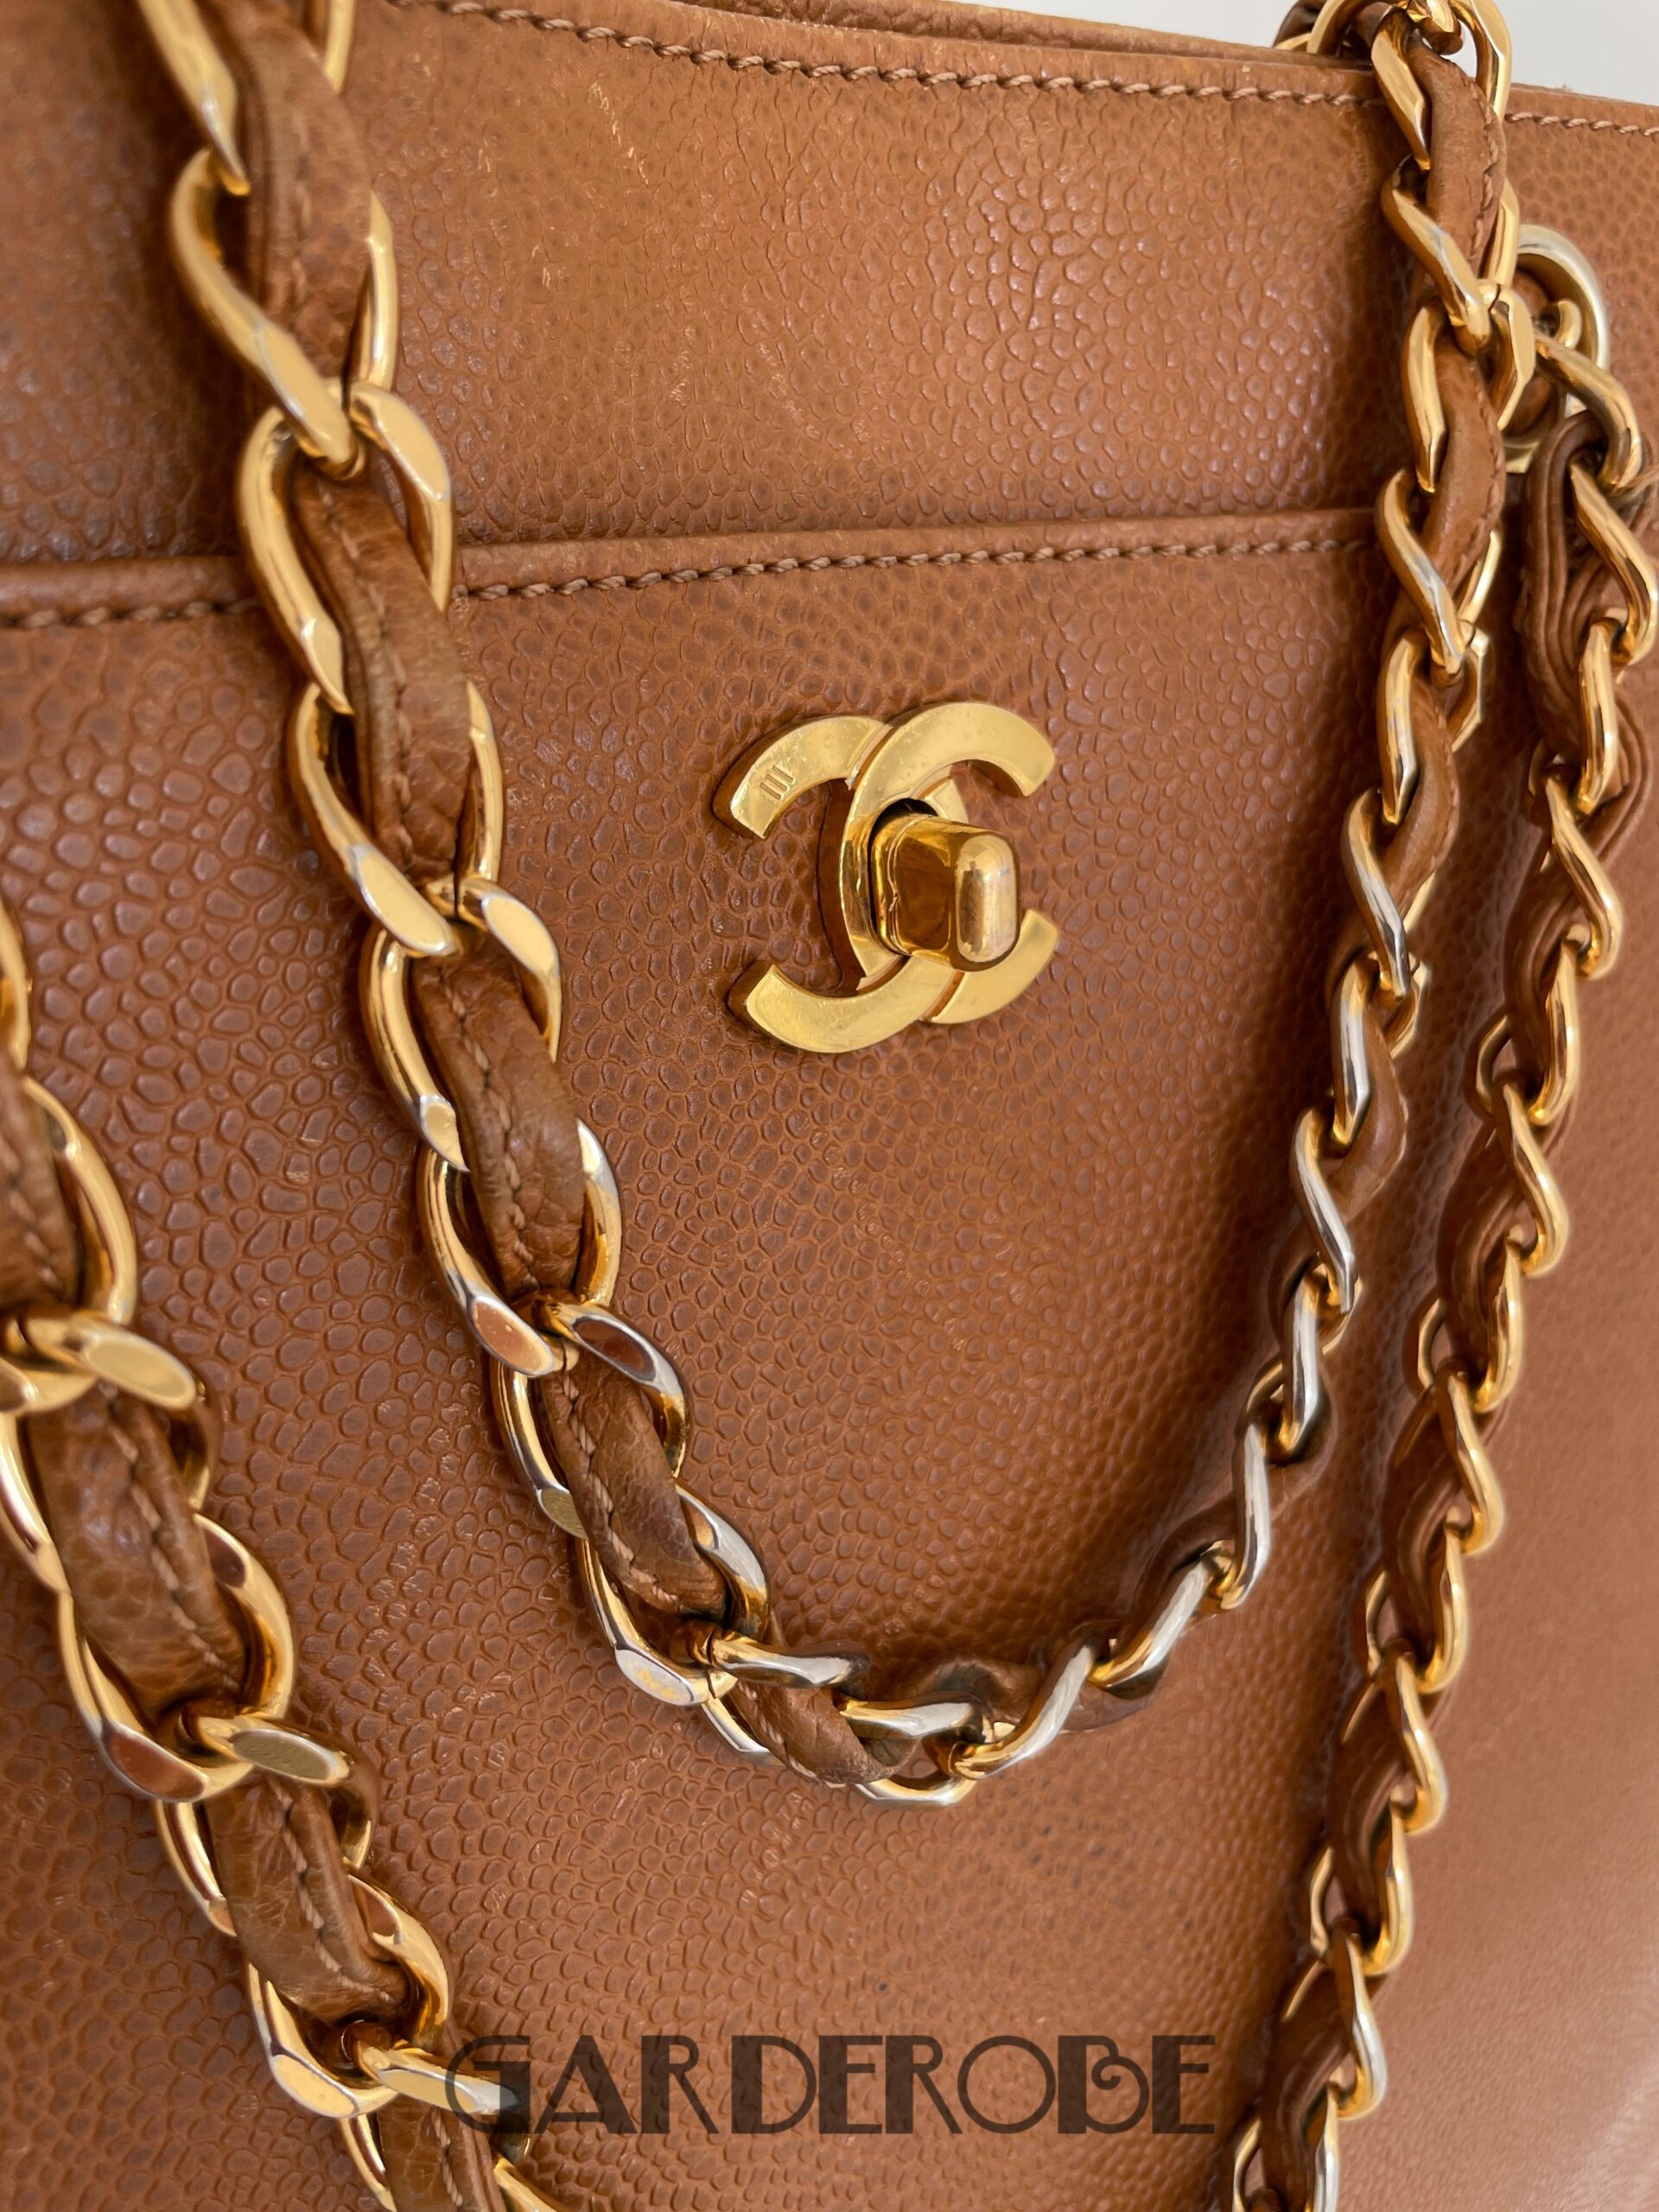 Vintage Chanel tote shopping bag